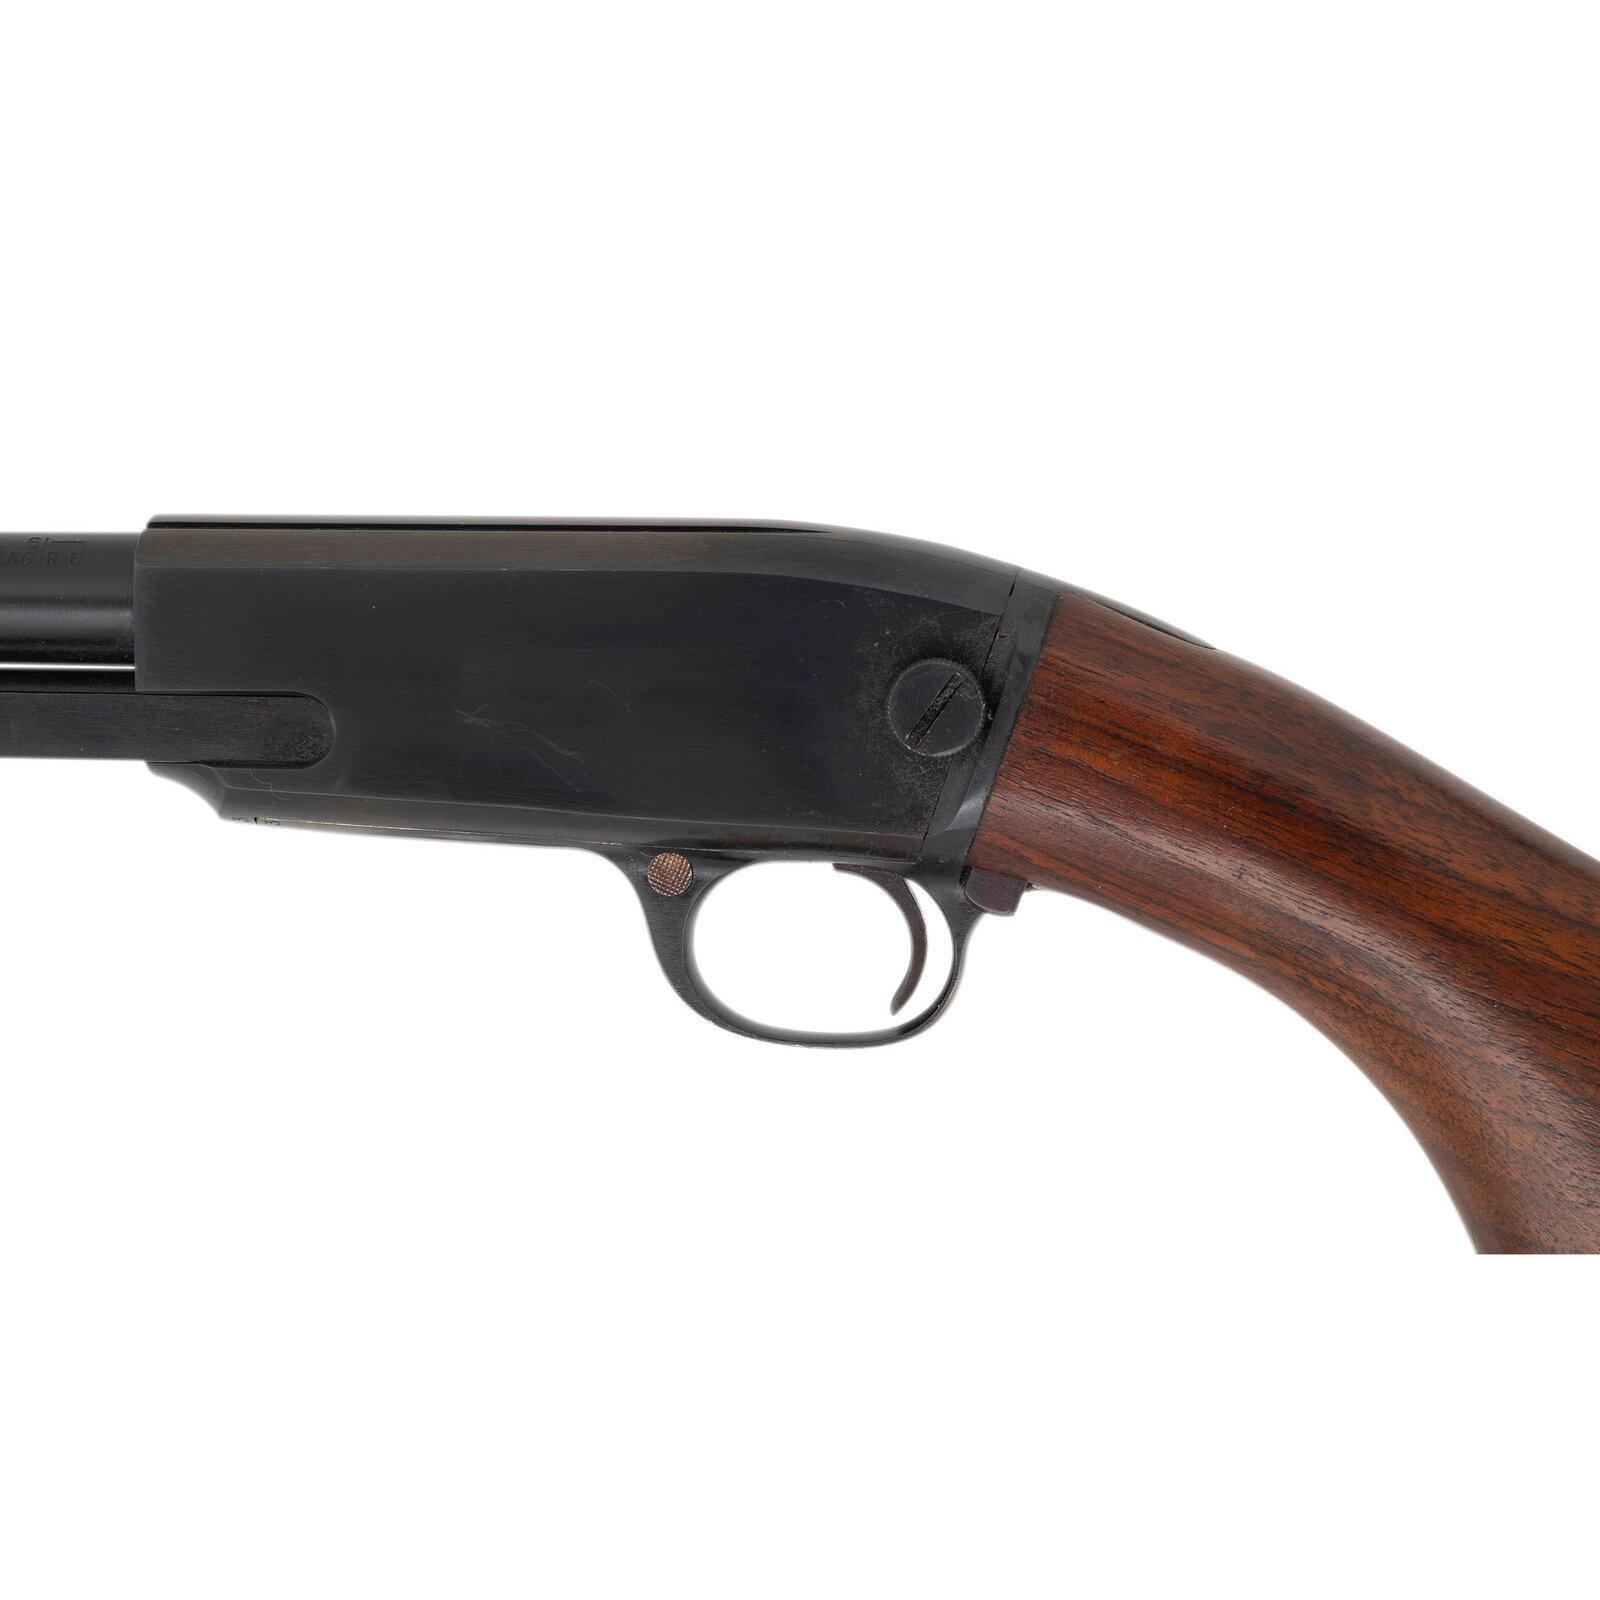 **Pre-64 Winchester Model 61 Rifle in .22 WMRF